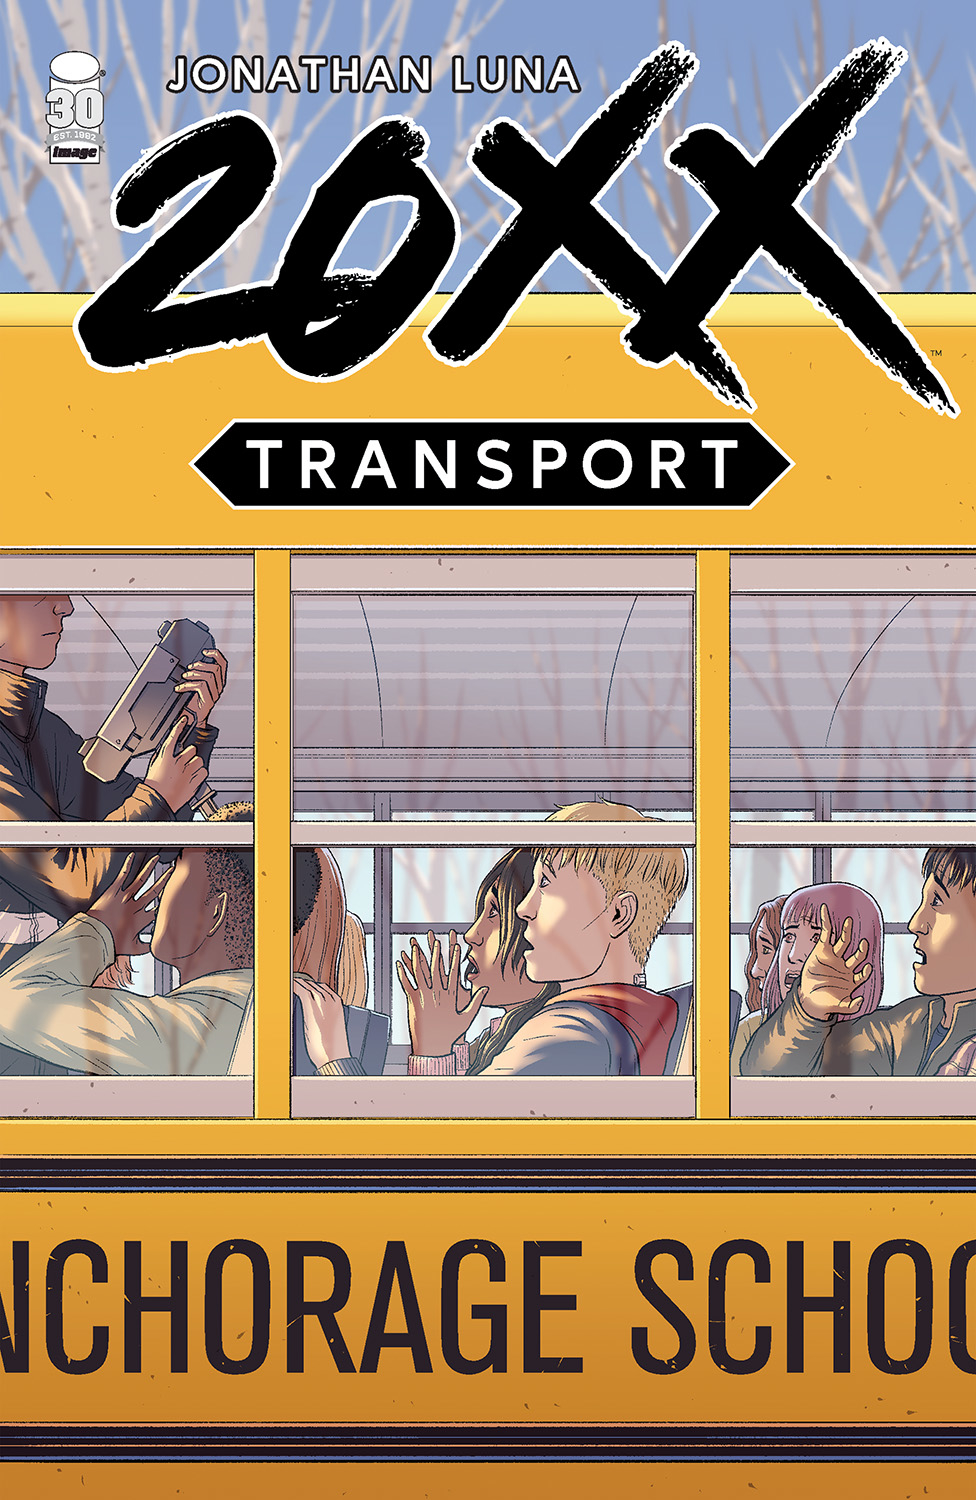 20xx Transport (One-Shot) (Mature)